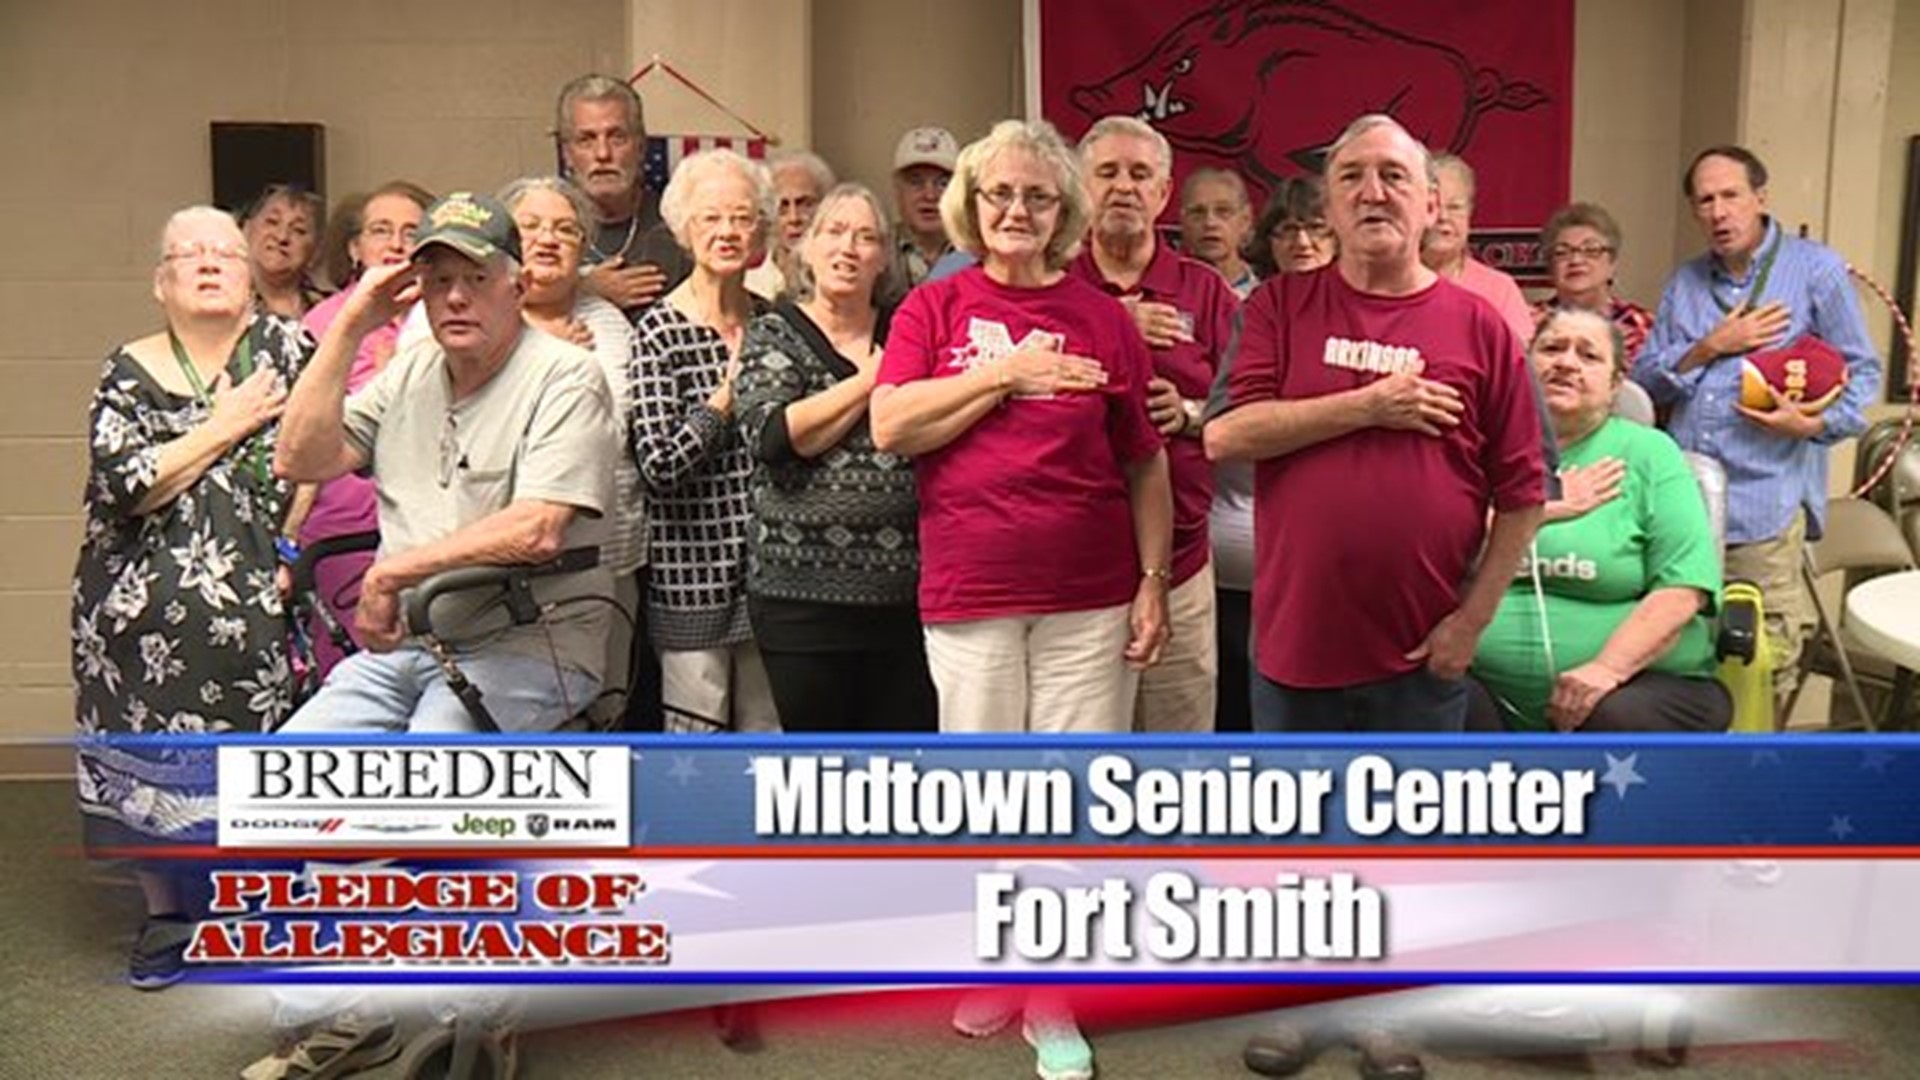 Midtown Senior Center - Fort Smith